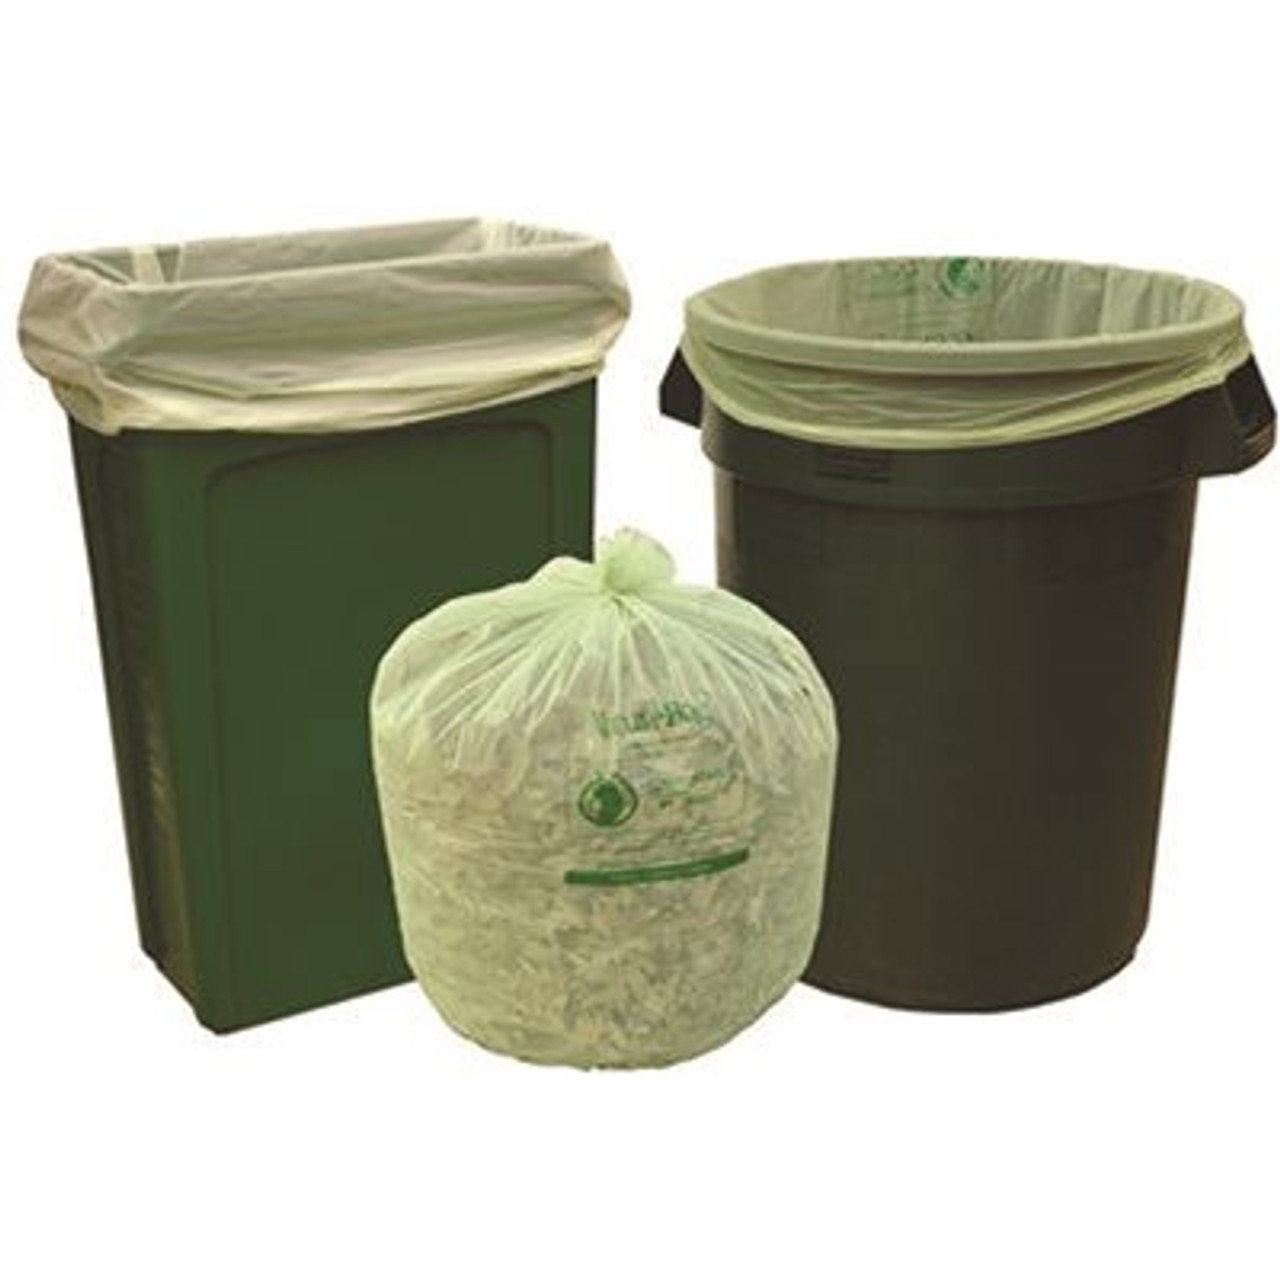 Natur-Bag 33 Gal. 33 in. x 40 in. 0.8 mil Green Compostable Trash Bags Slim Liner (25/Roll, 8 Rolls/Case)